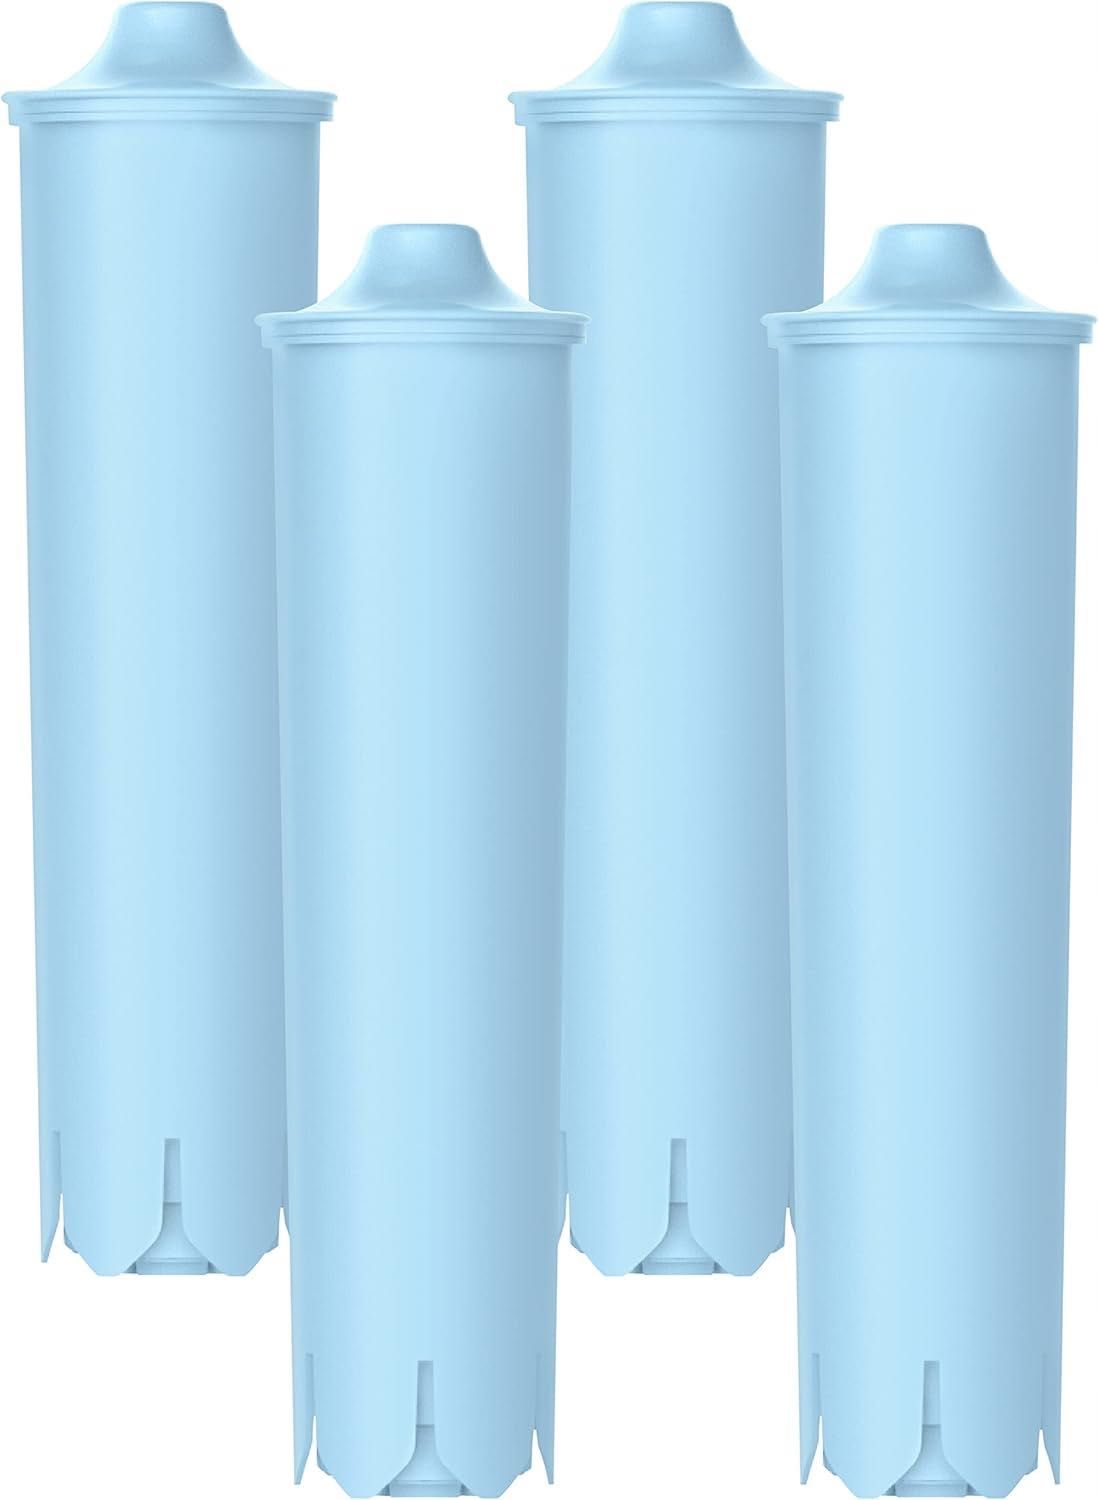 Zamiennik filtra wody Maxblue dla Jura 71312 Blue